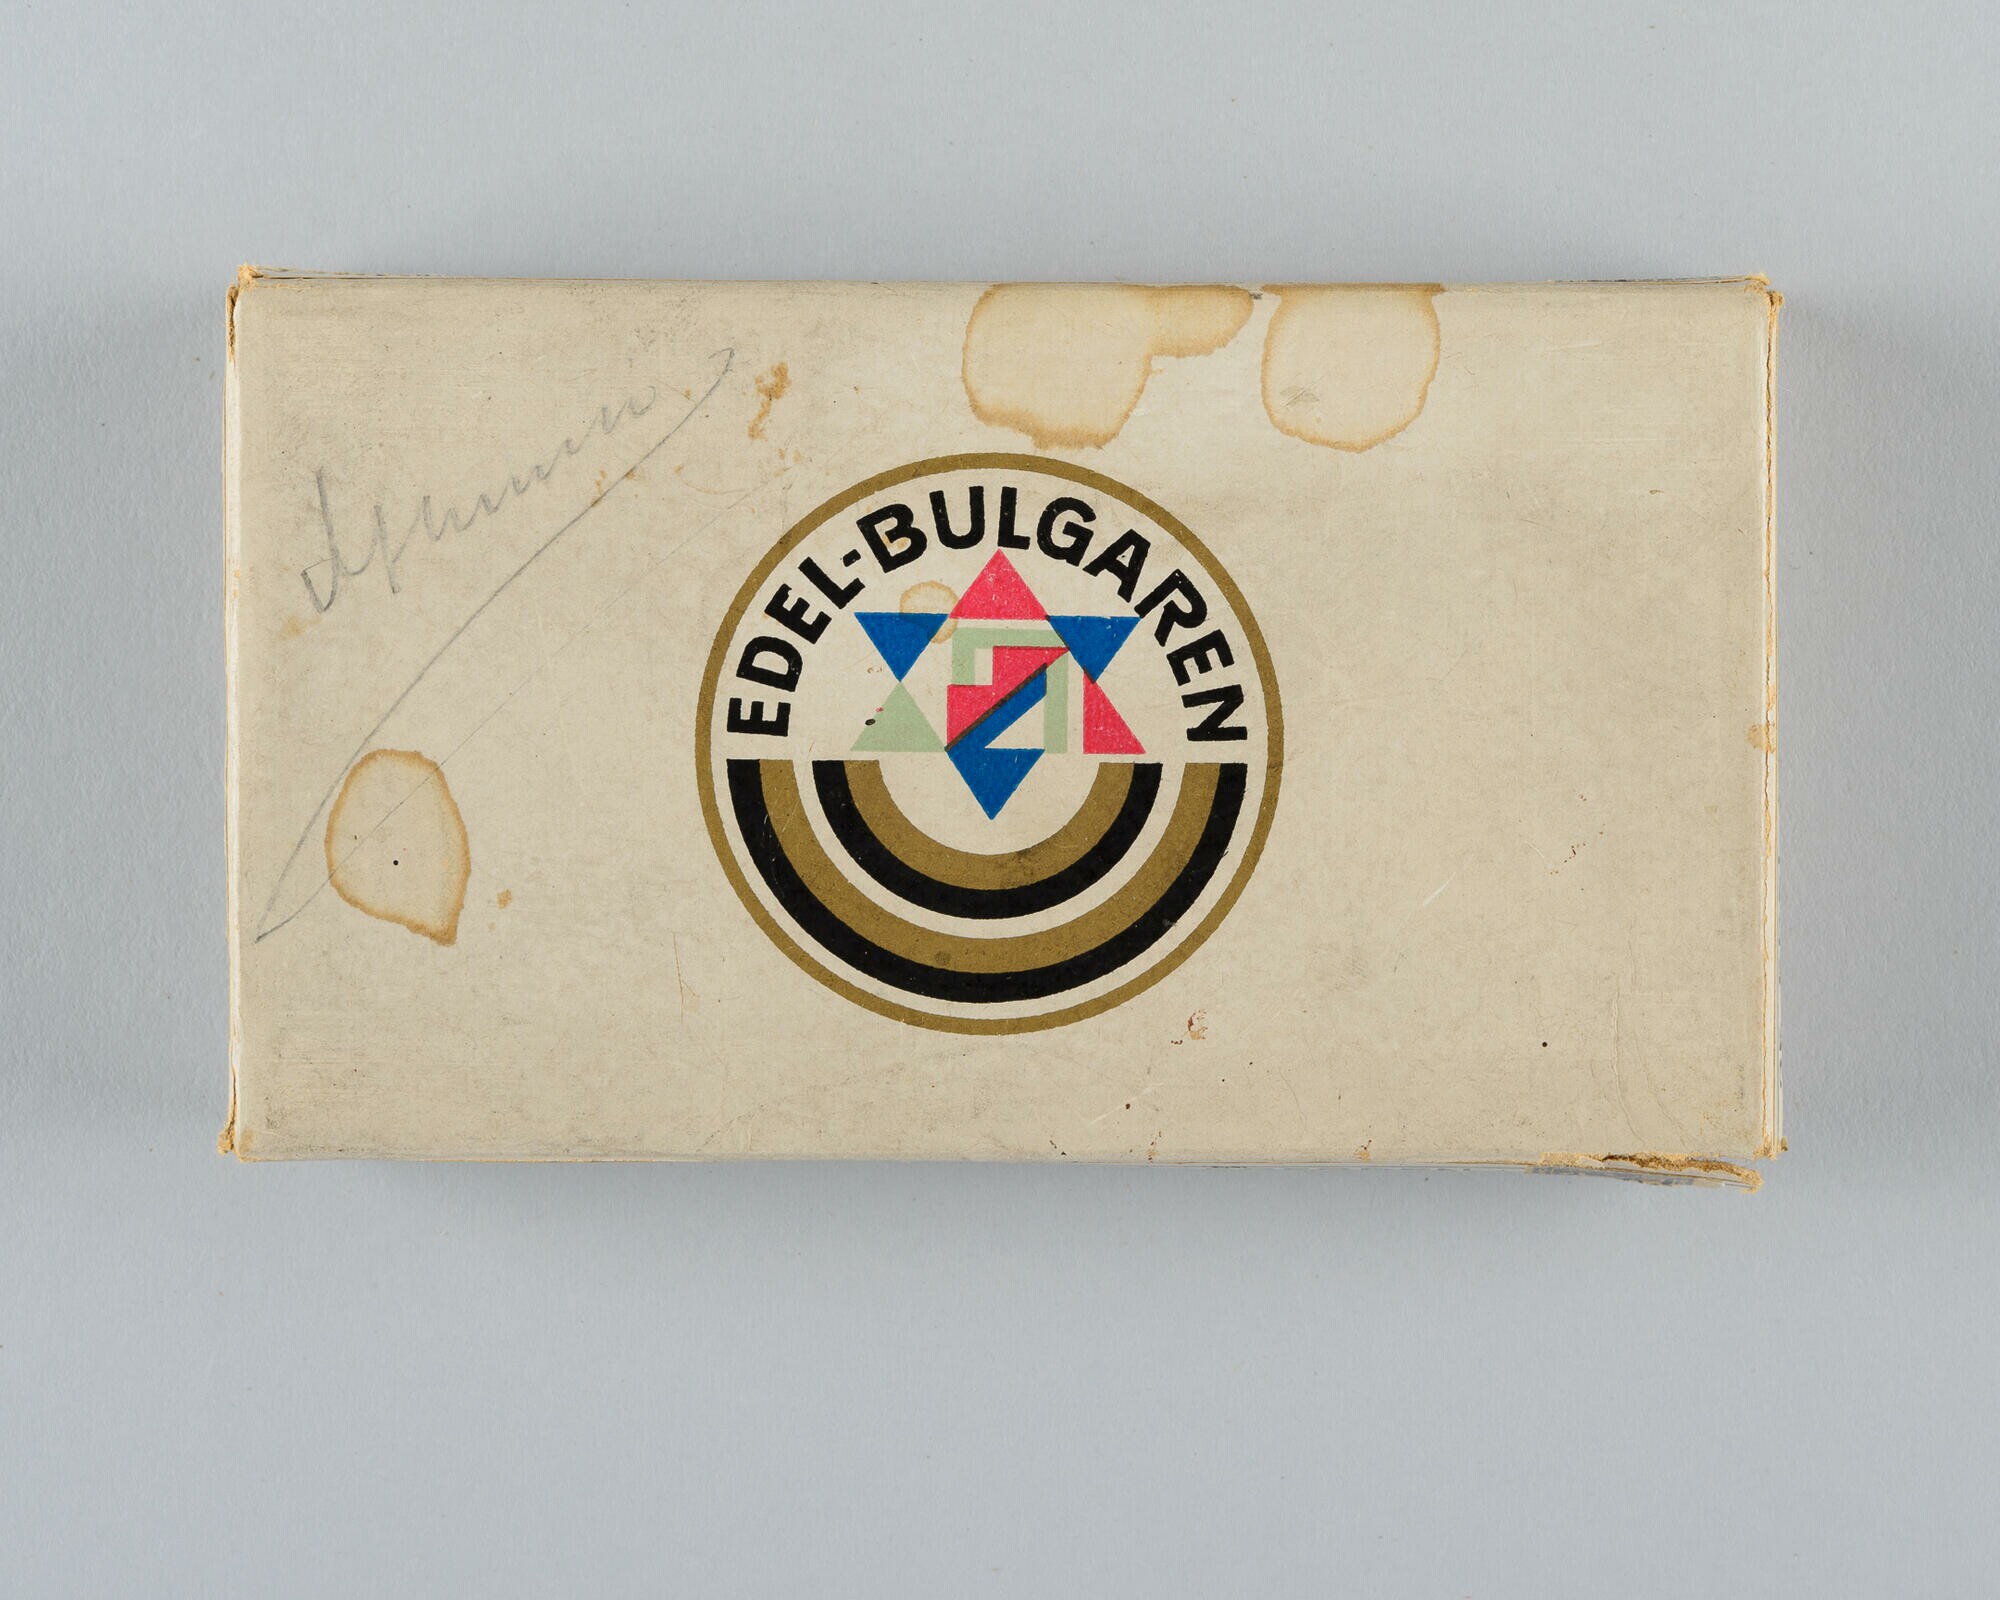 Zigarettenschachtel der Marke "Edel-Bulgaren" (Stadtmuseum Dresden CC BY-NC-ND)